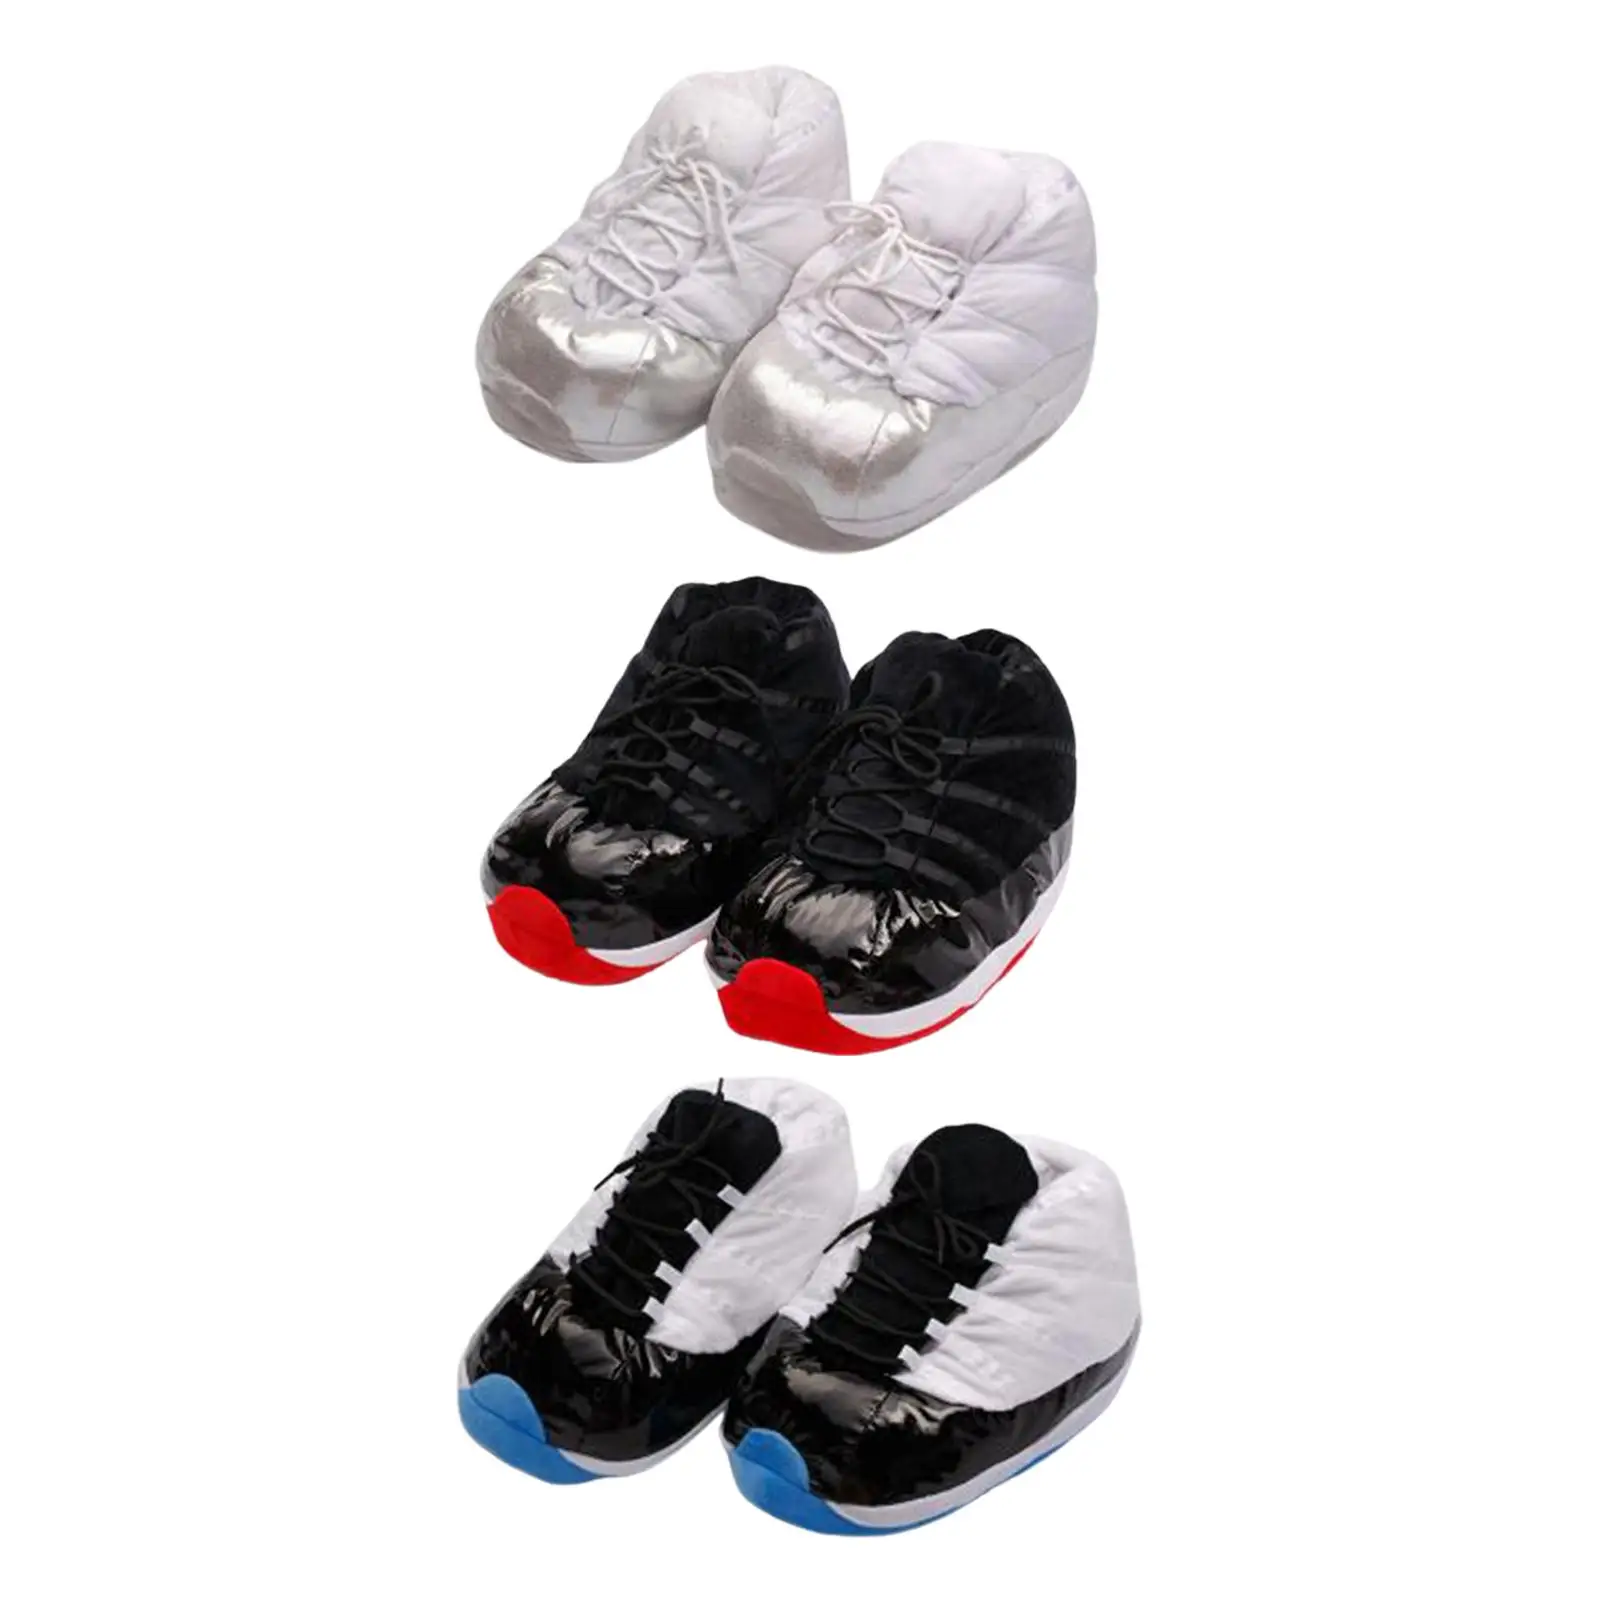 Winter Warm Slippers Home Shoes Anti Slip Floor Slippers Soft Flat Heel Comfortable for Parties Indoor Outdoor Dorm Casual